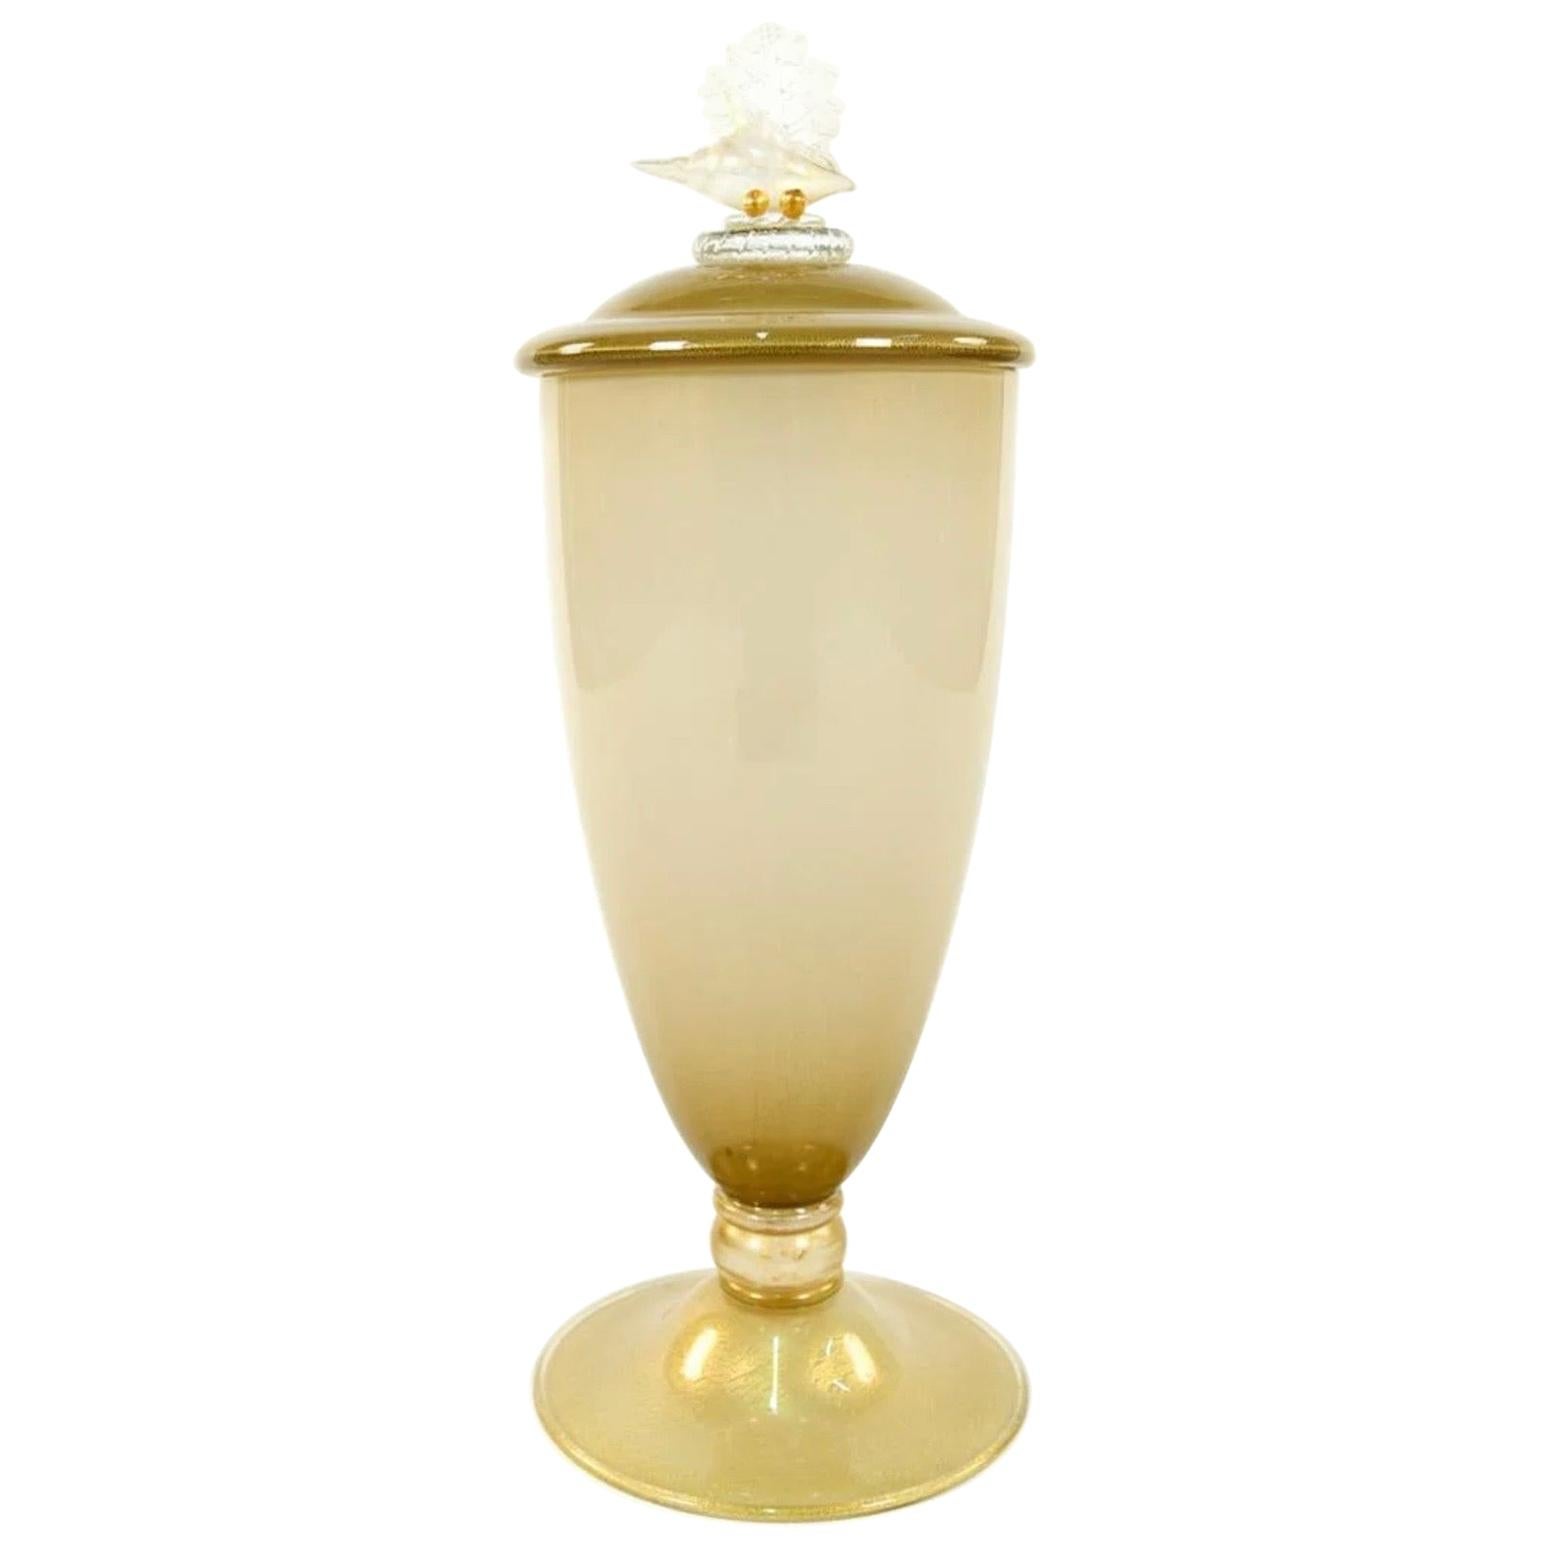 Lorin Marsh Seguso Vasija de concha con tapa de cristal de Murano italiano Fleck dorado en venta